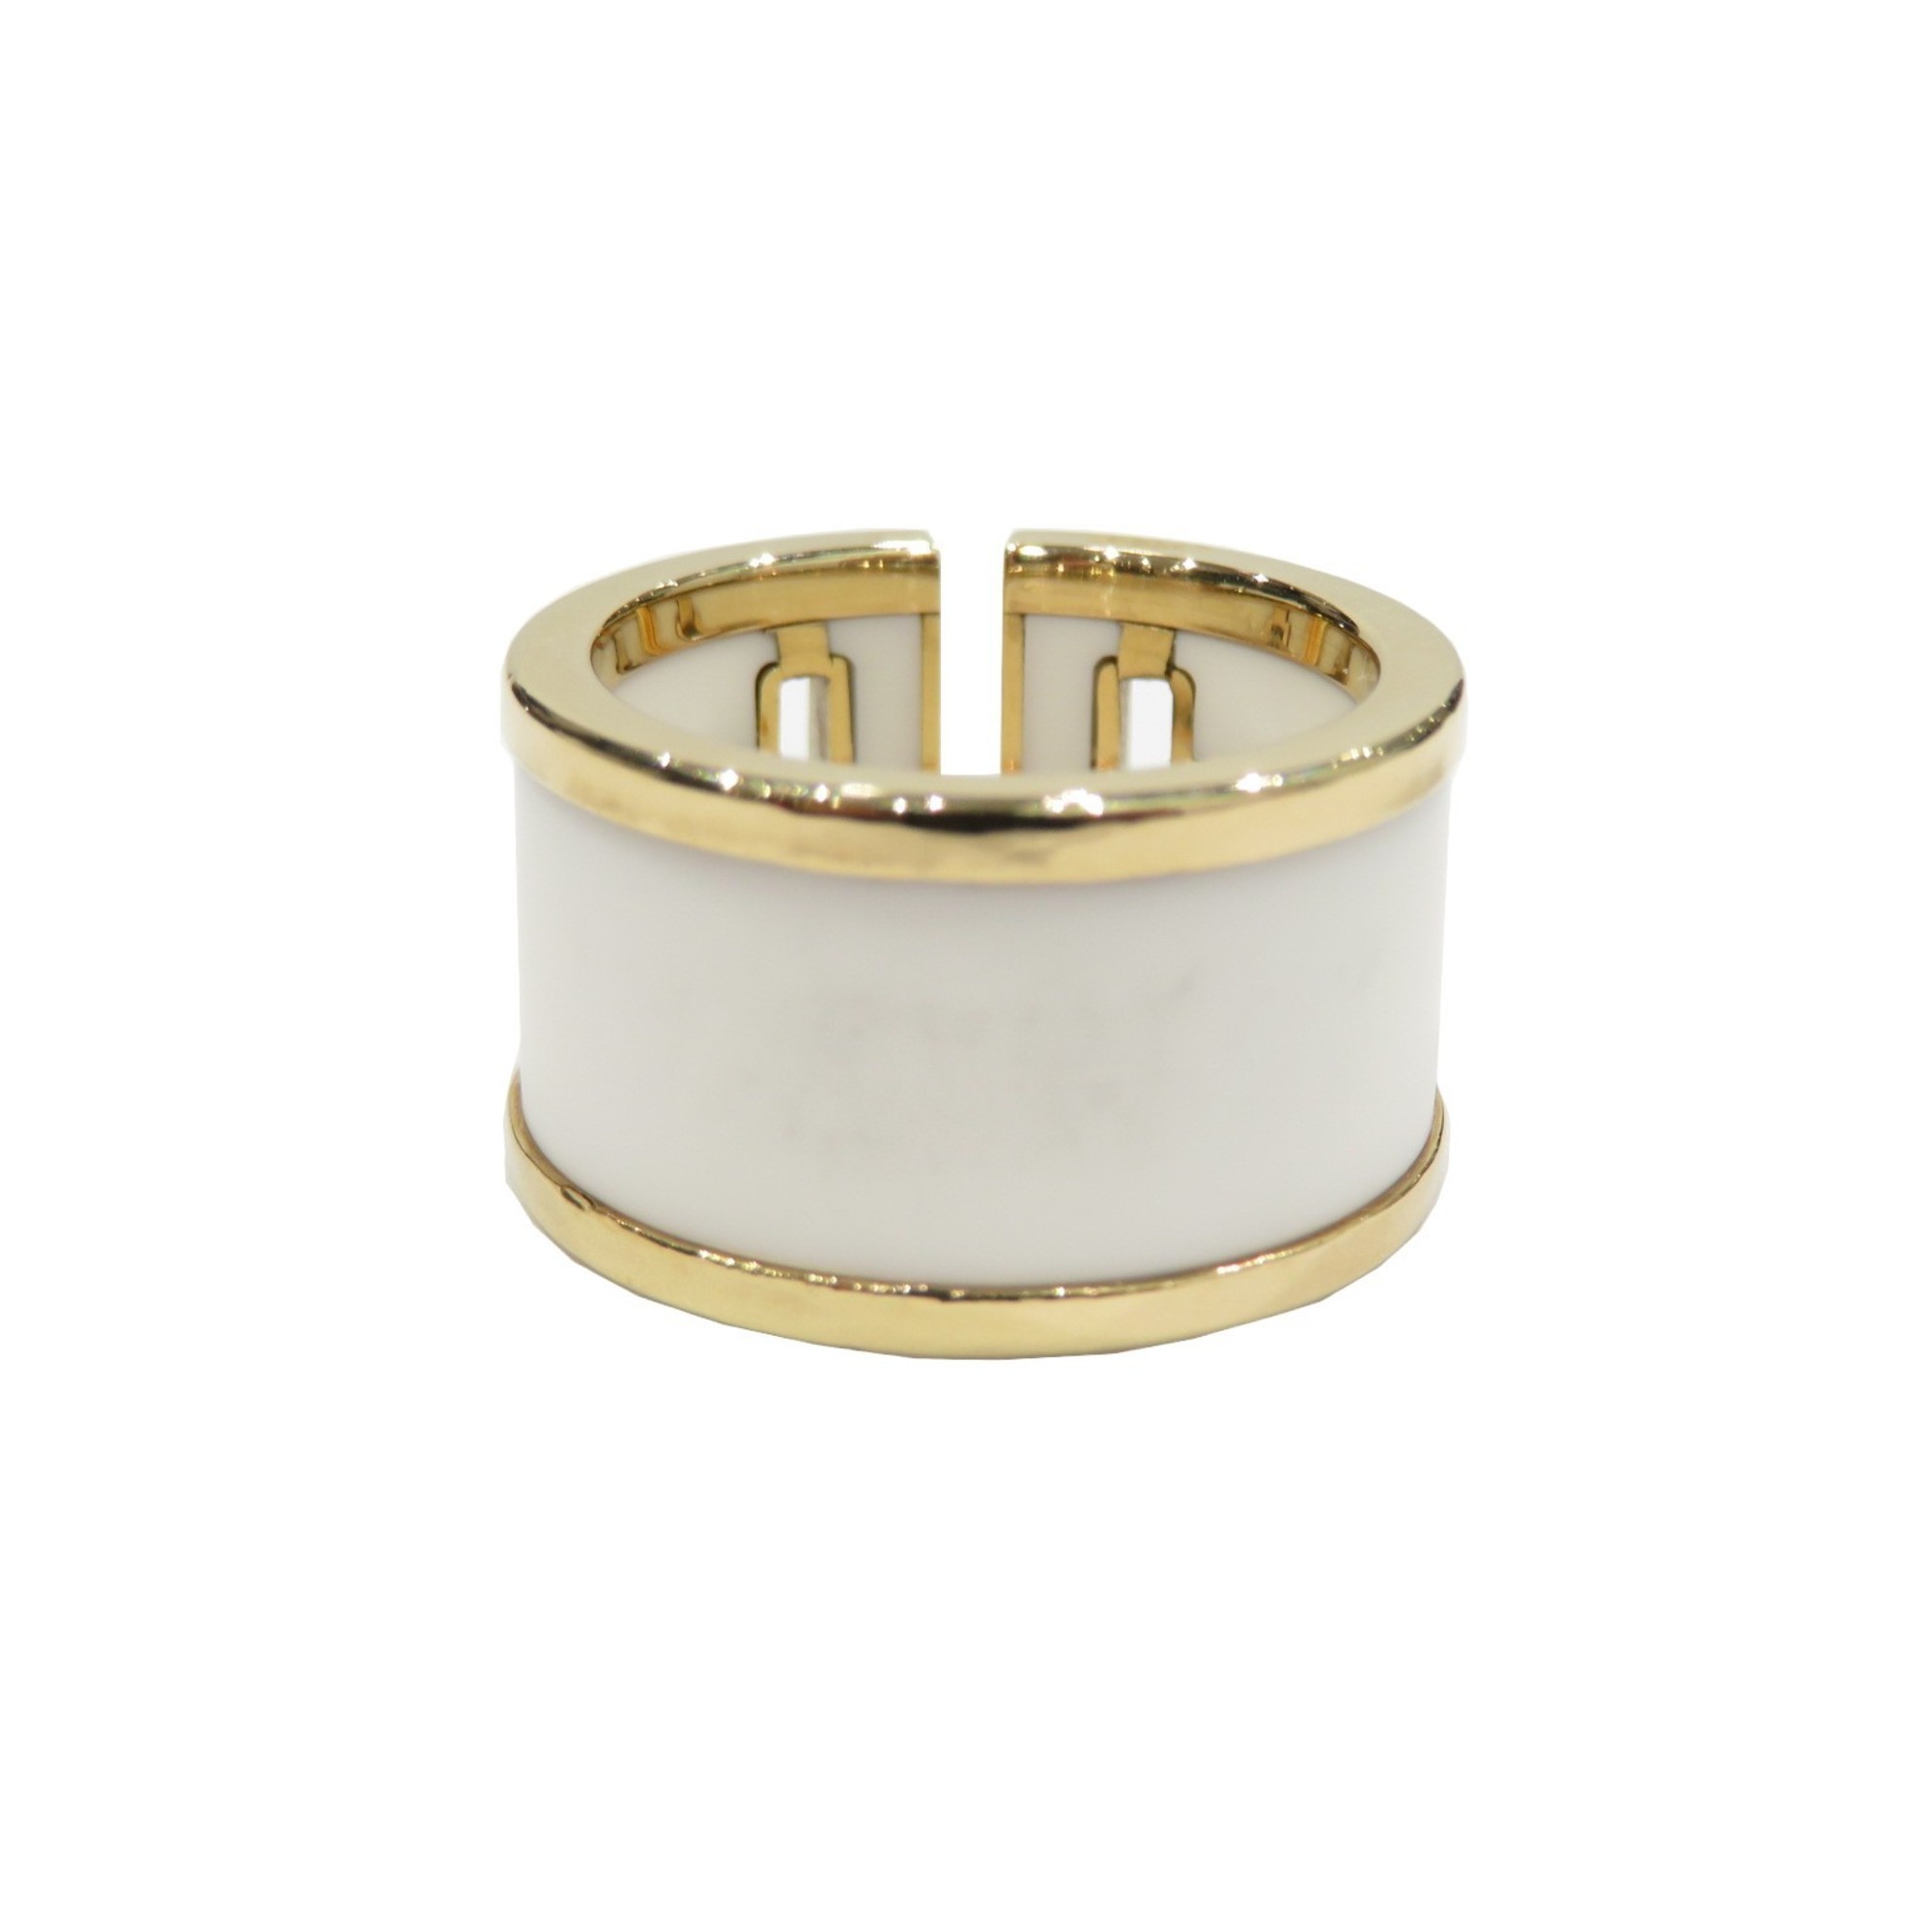 TIFFANY & CO. T-Cutout Ring, 18K Yellow Gold x White Ceramic, Size 6.5, 8.5g